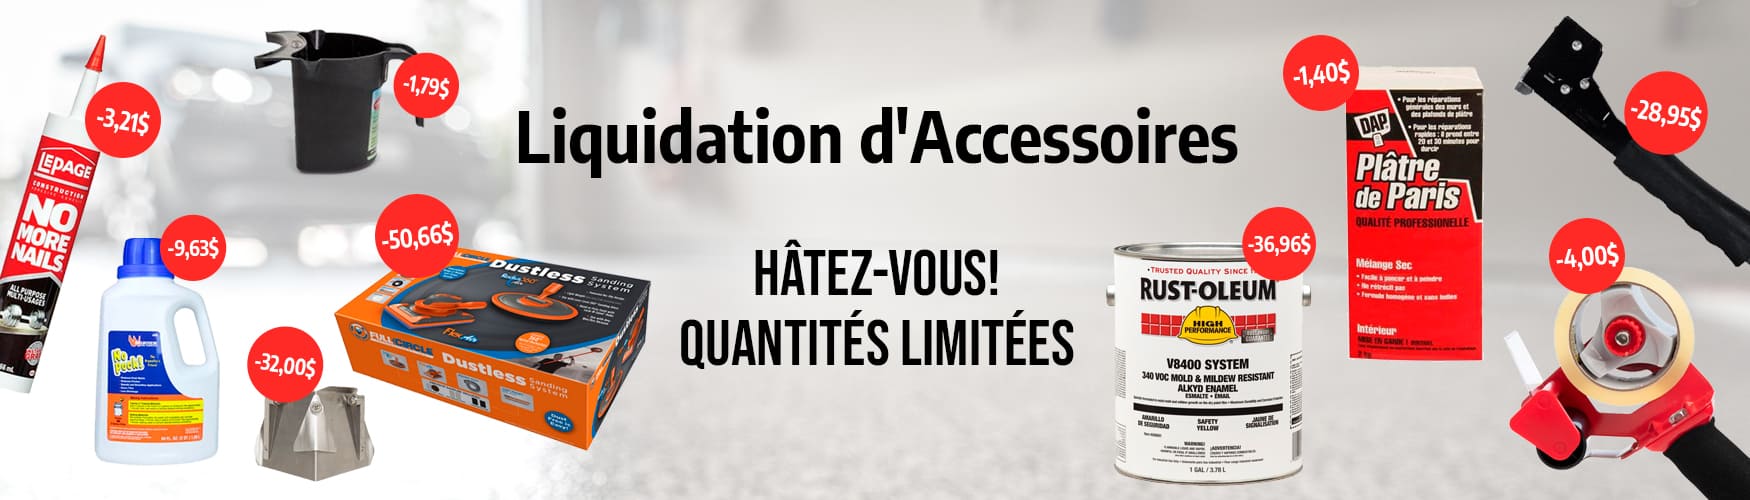 liquidation-accessoires-1750x500-new